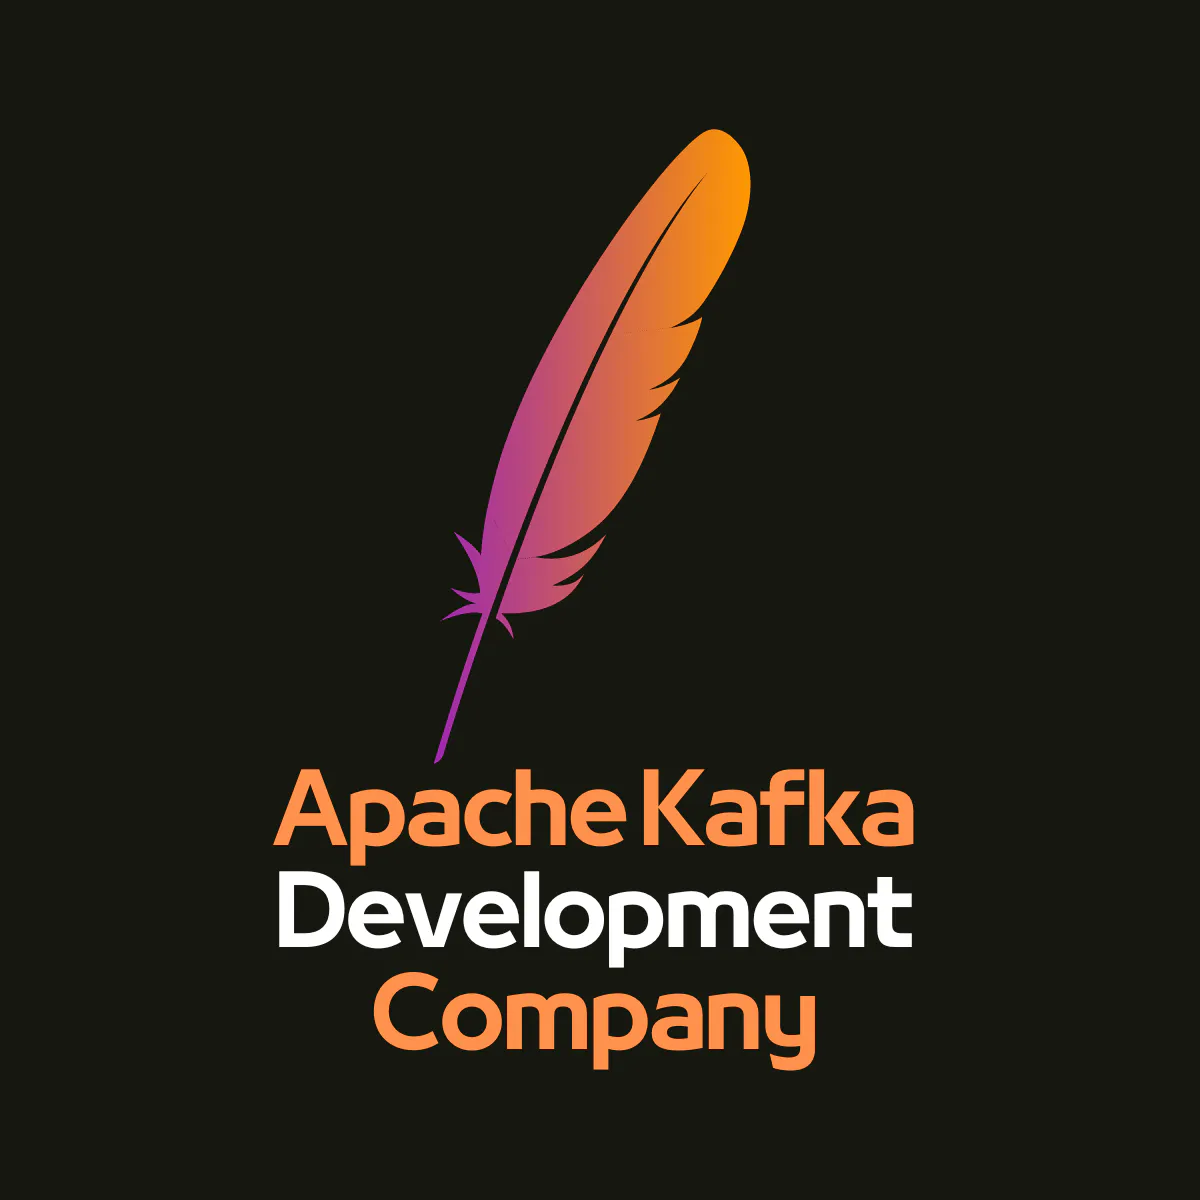 Apache Kafka Development